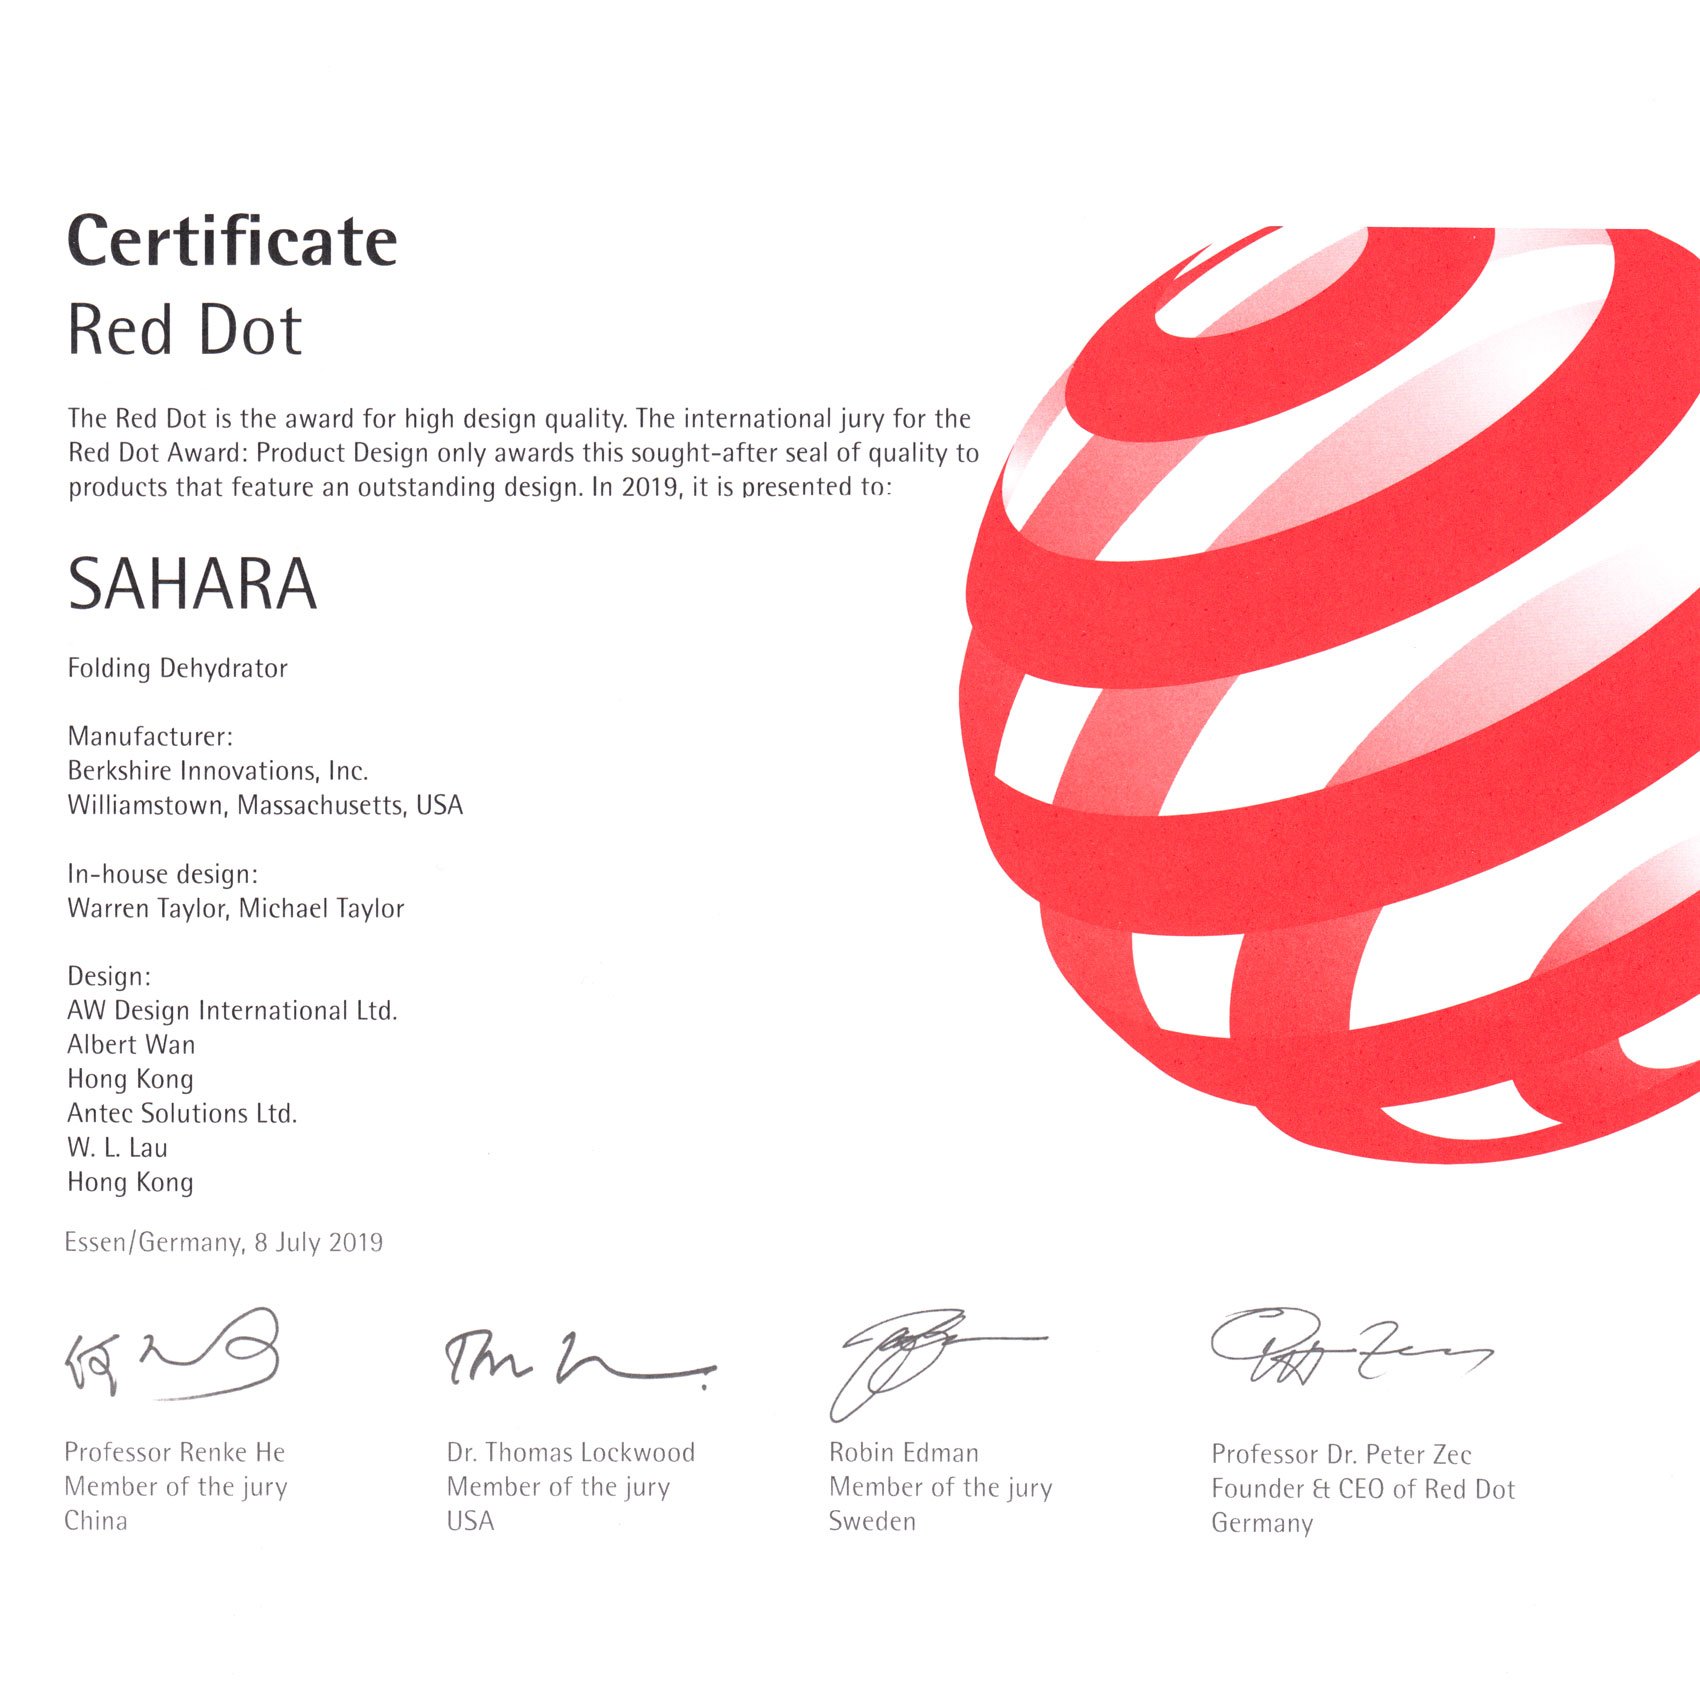 Knogle Tom Audreath Forfærde Brød & Taylor on Twitter: "Our Red Dot Design Award Certificate Red Dot is  an international product design and communication design prize awarded by  the Design Zentrum Nordrhein Westfalen in Essen, Germany. #